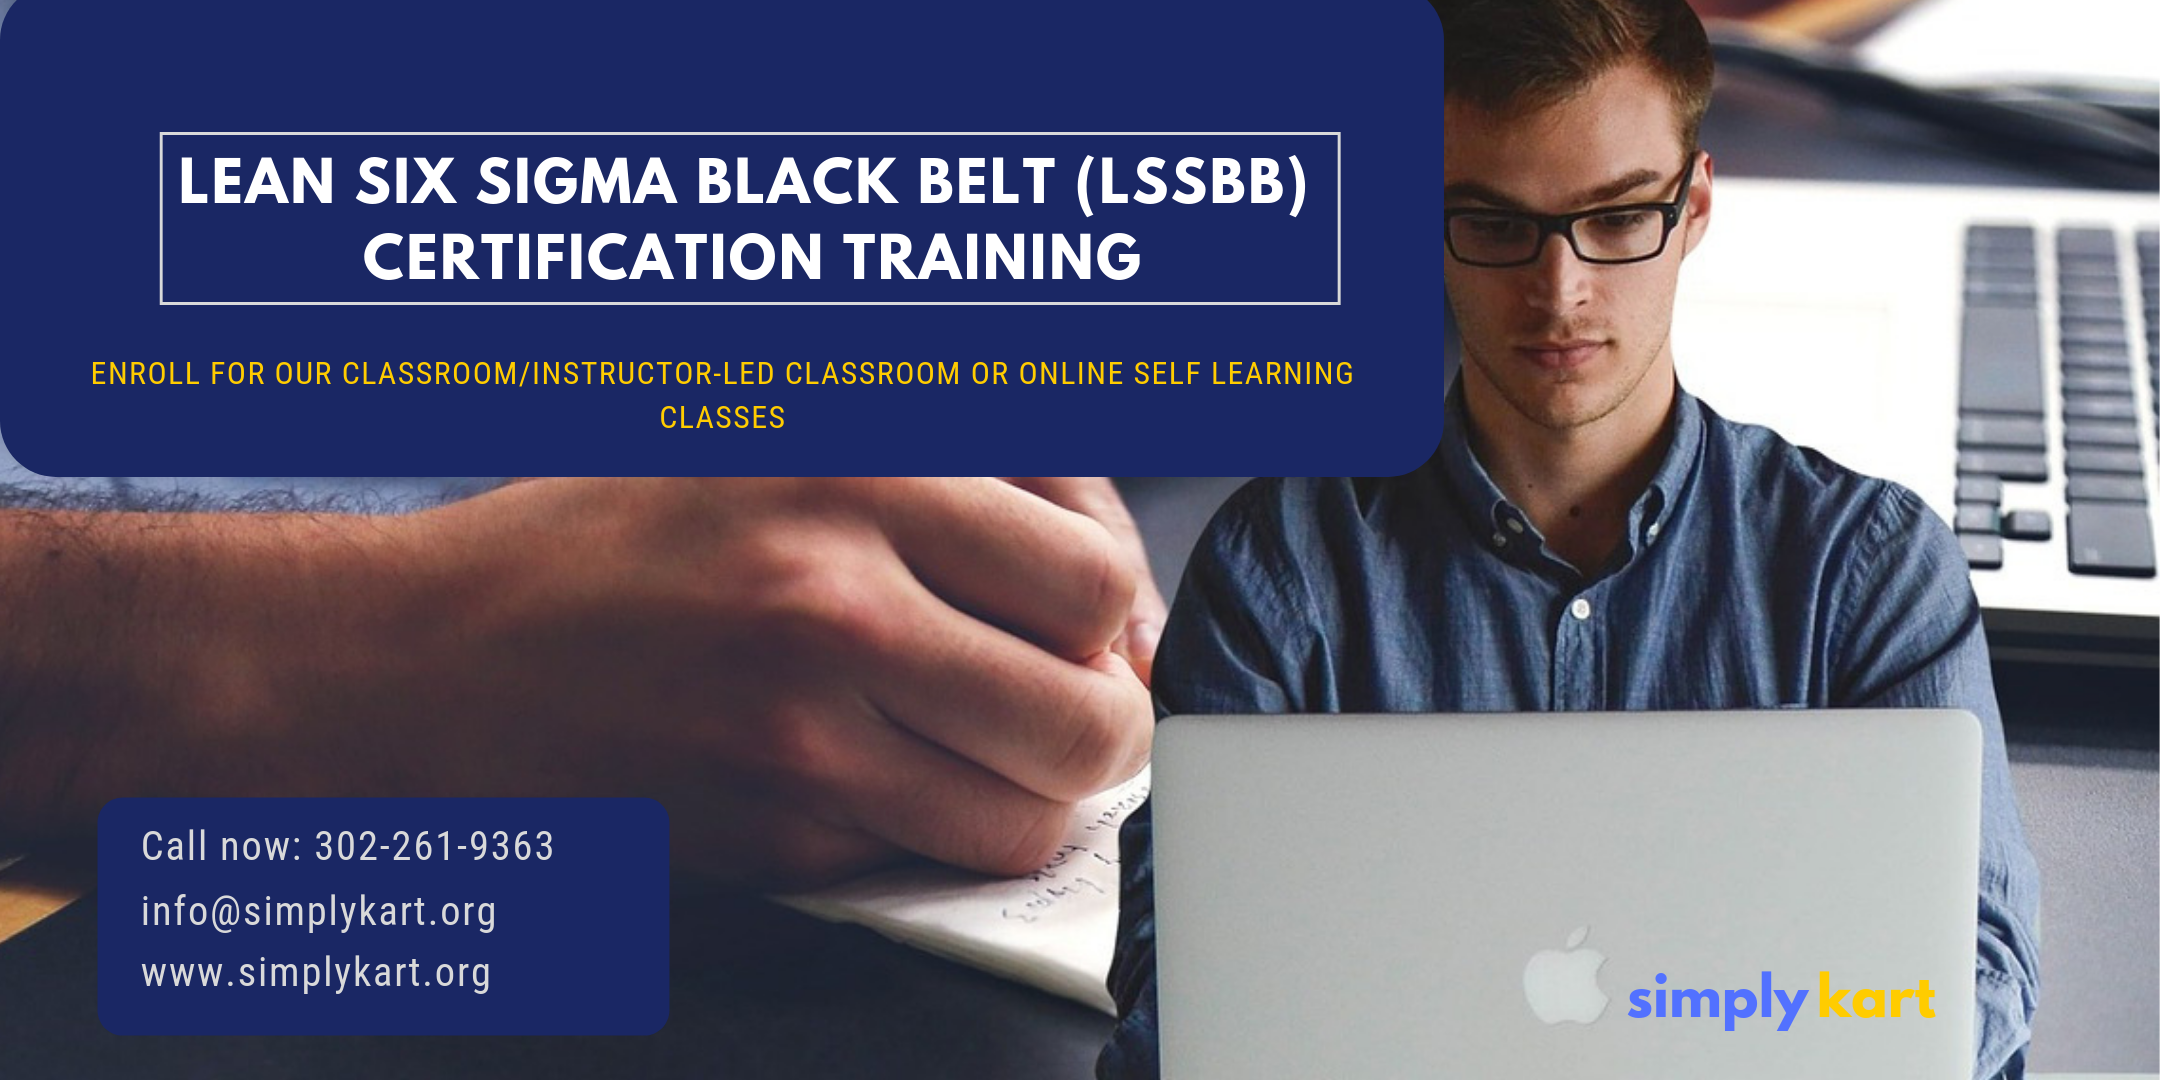 Lean Six Sigma Black Belt (LSSBB) Certification Training in Corvallis, OR